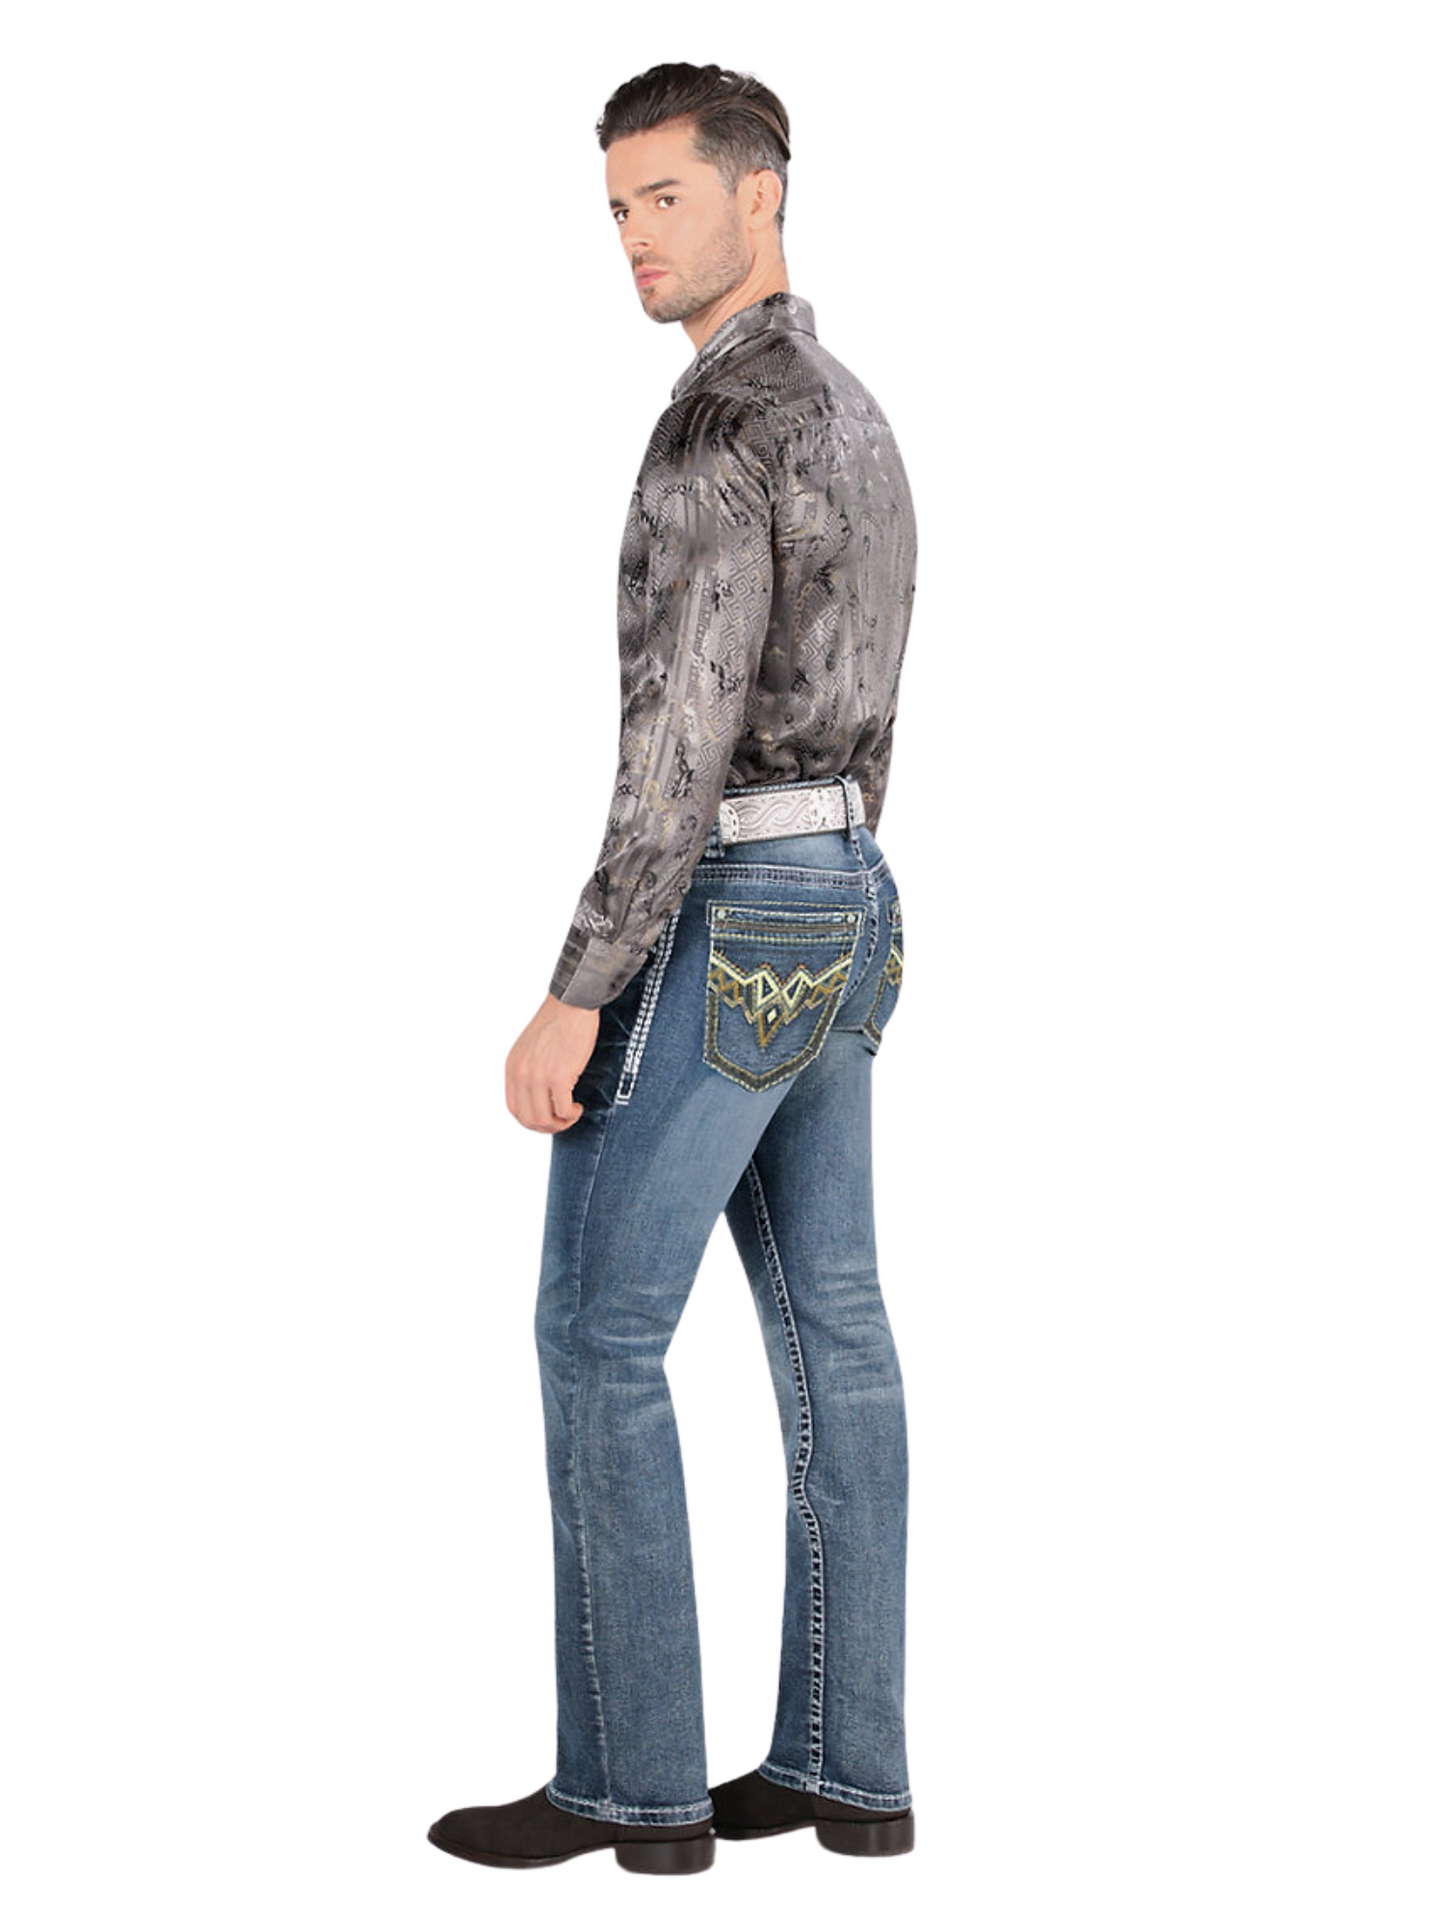 Stretch Denim Jeans for Men 'Montero' - ID: 4608 Denim Jeans Montero